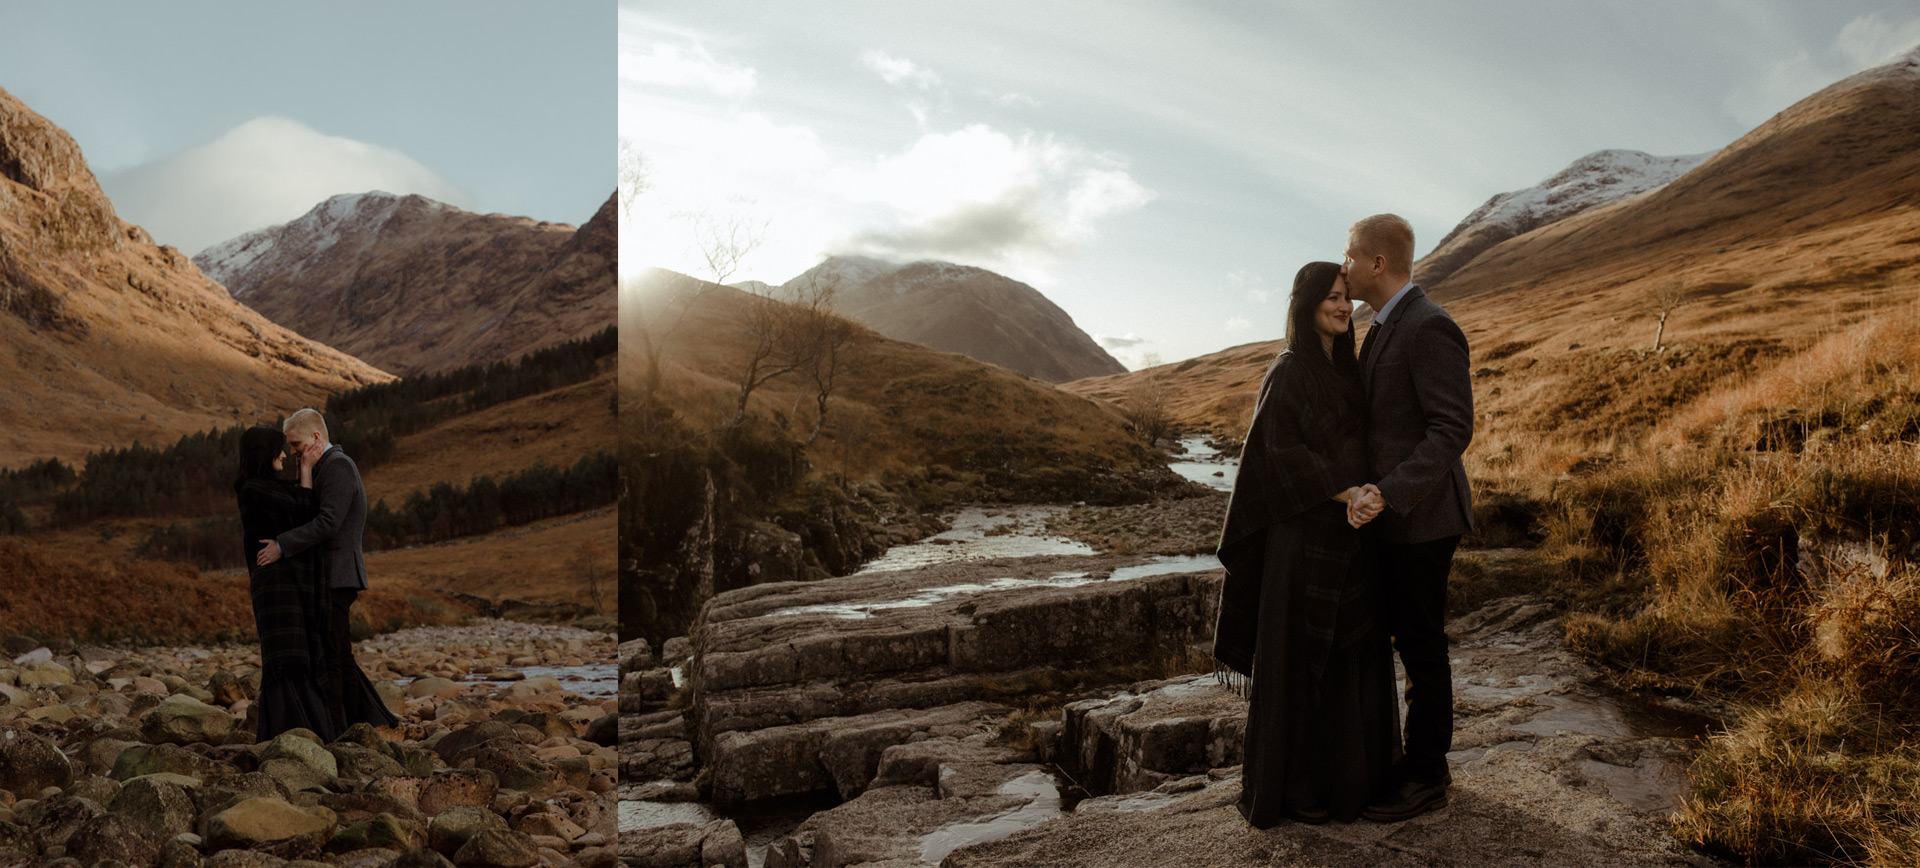 glen coe adventure photoshoot - couple in autumn embrace